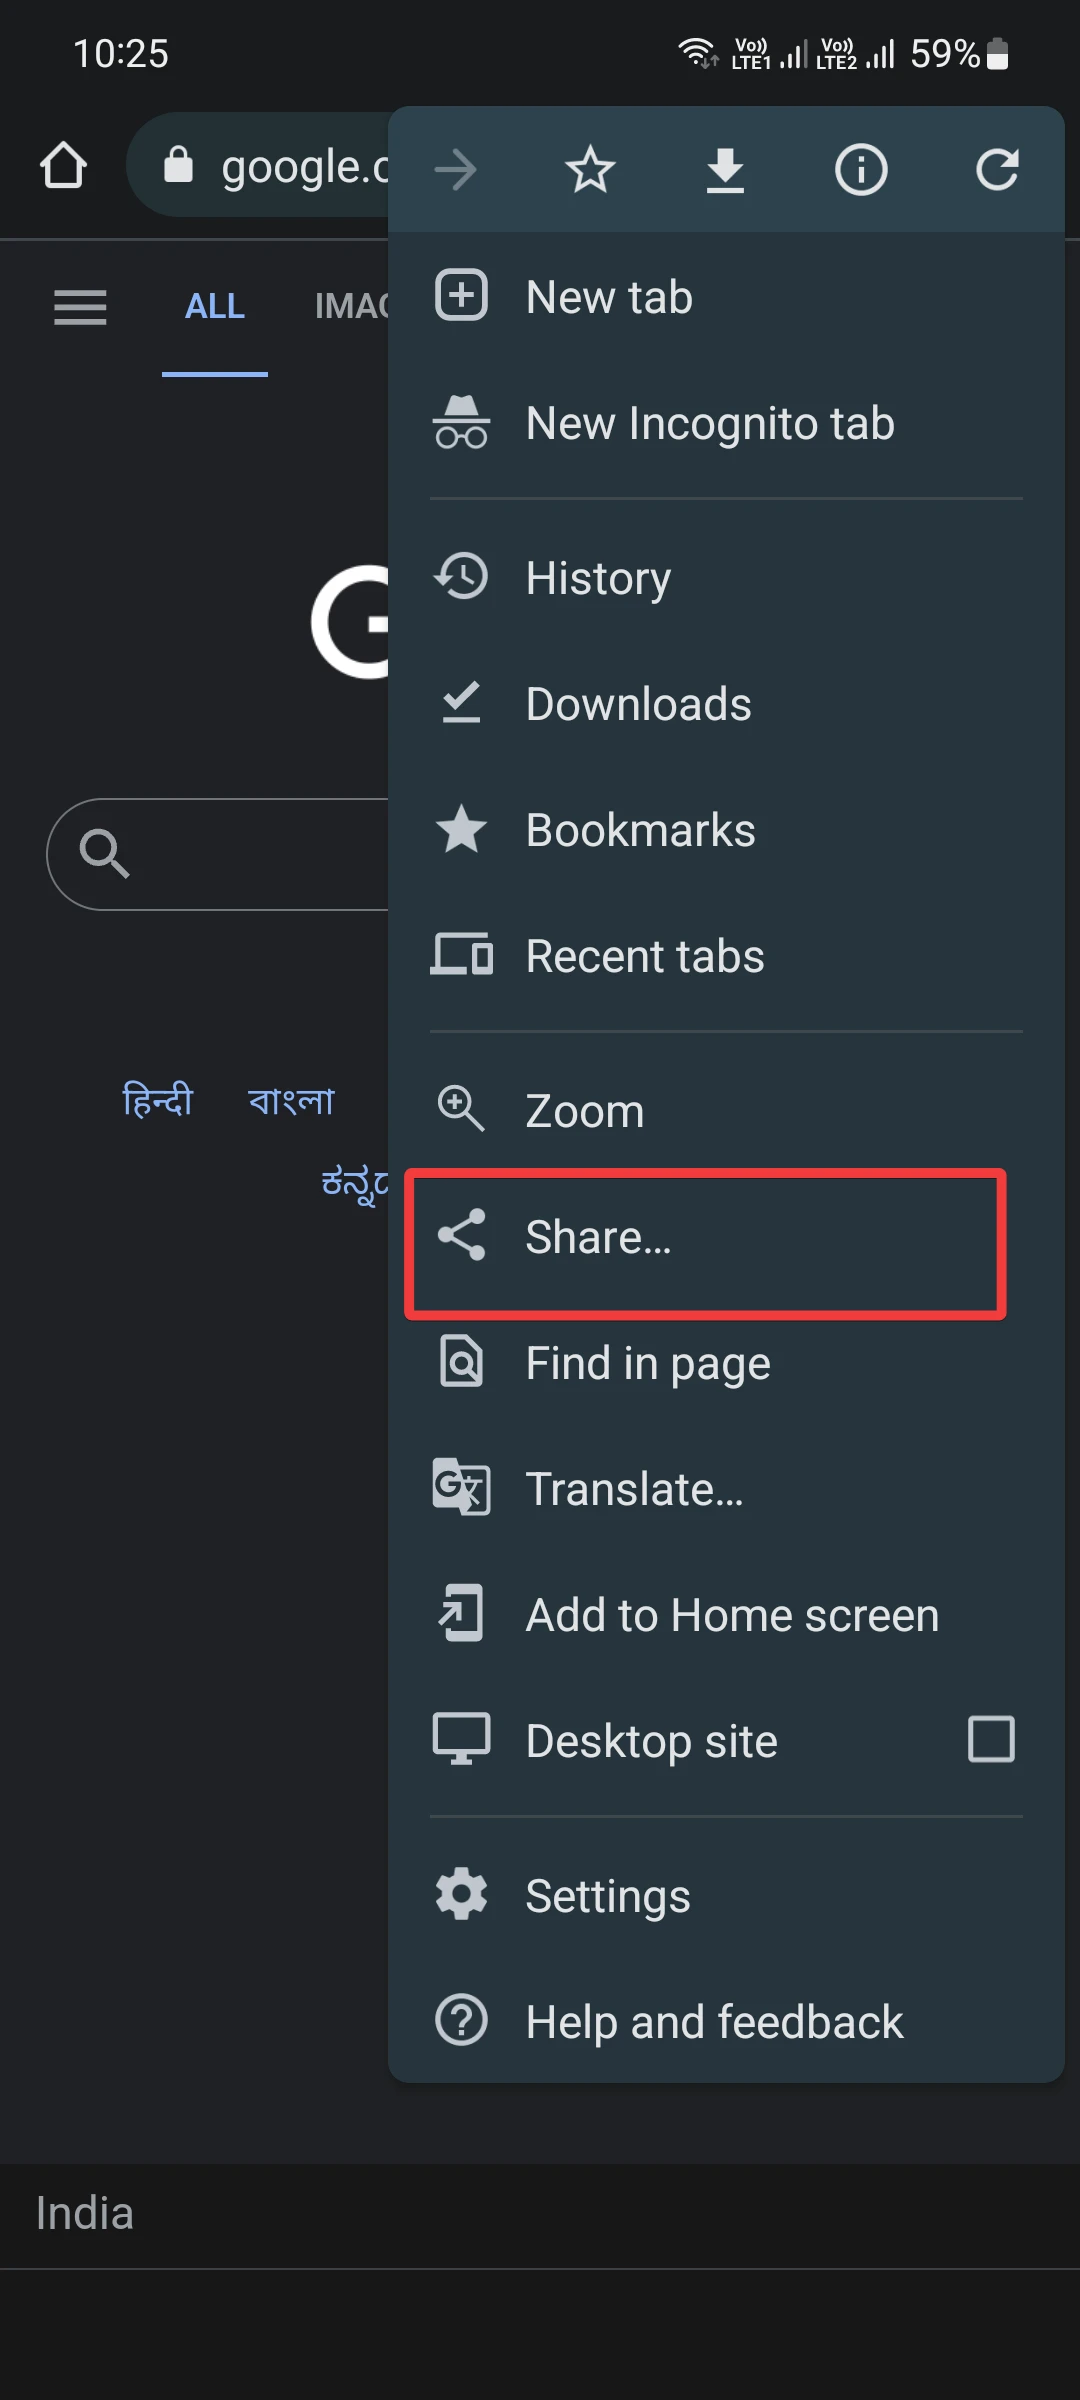 Share button option